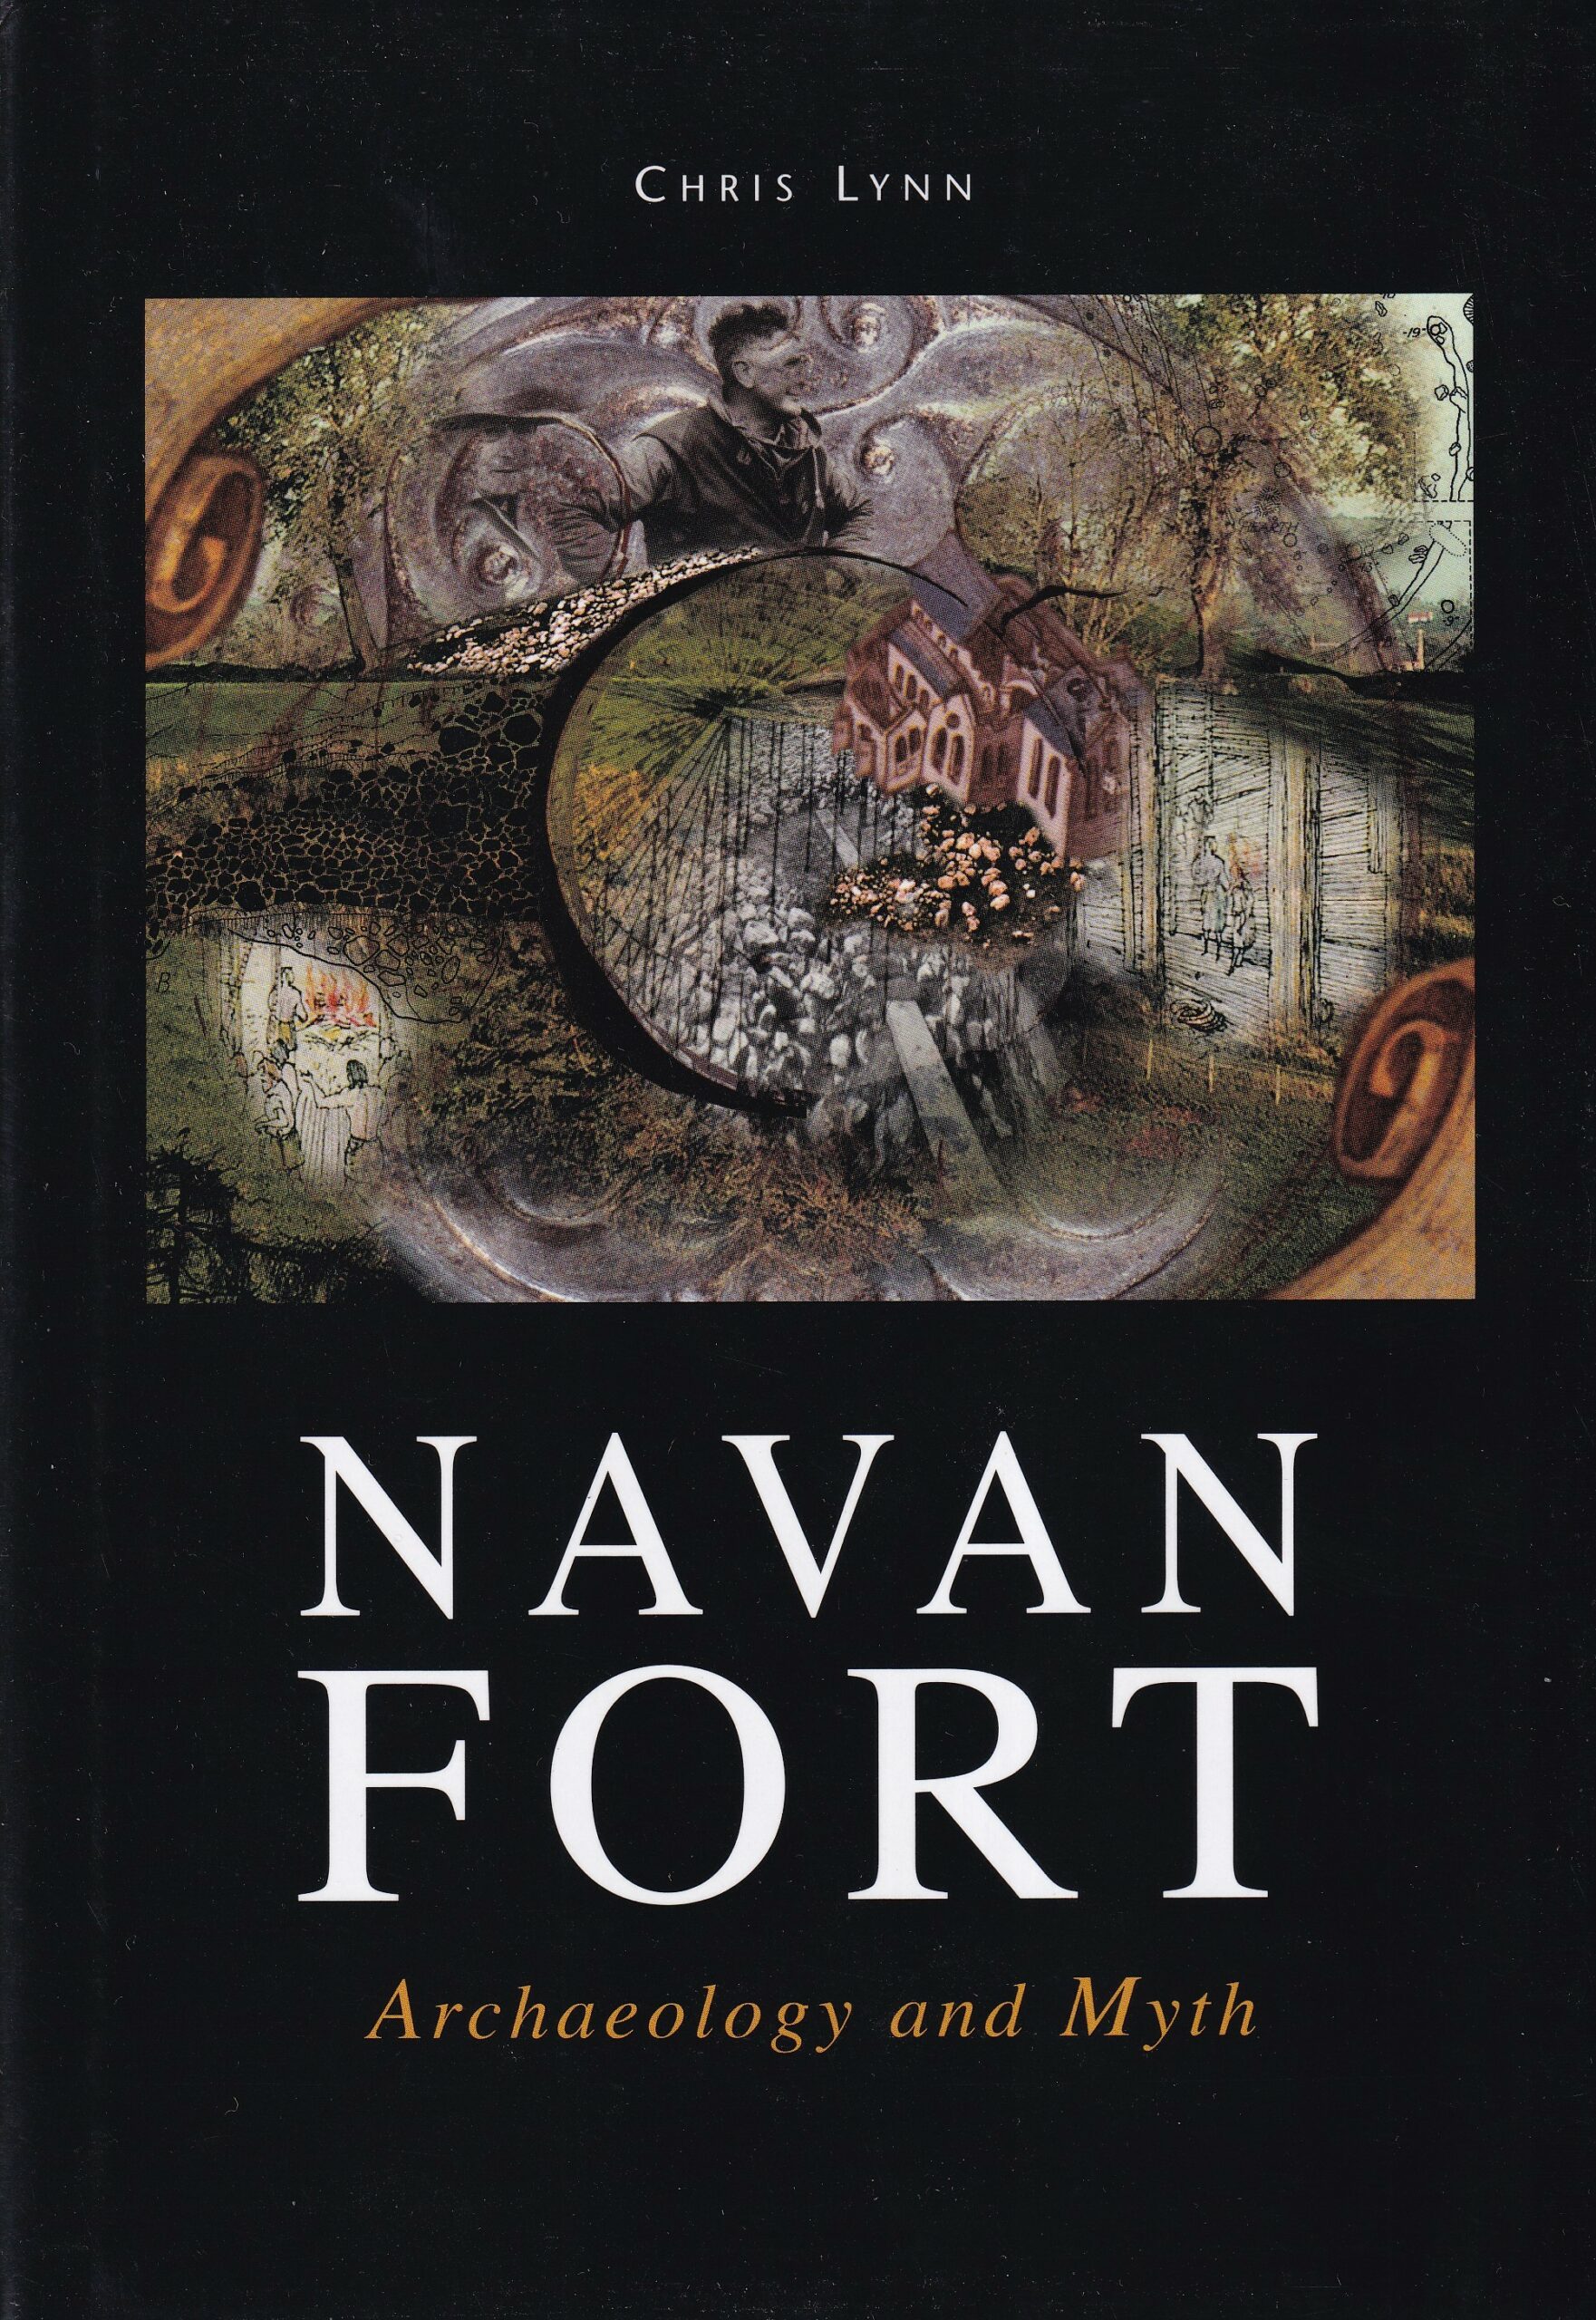 Navan Fort: Archaeology and Myth by Chris Lynn